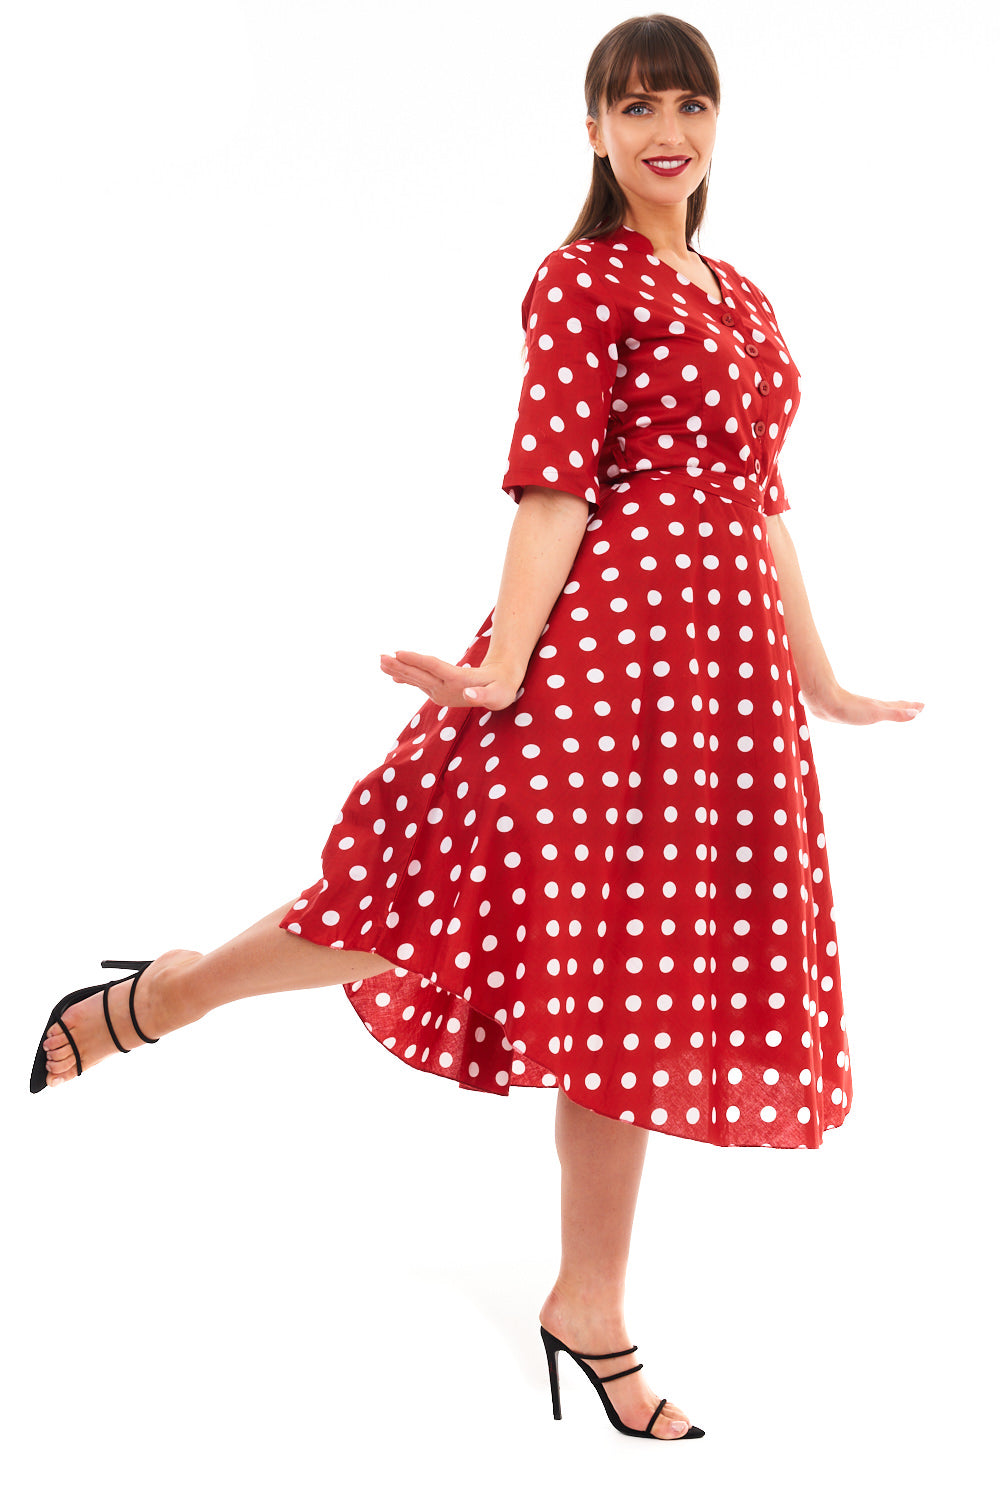 Retro Vintage 1940's Polka Dot Shirt Dress in Red